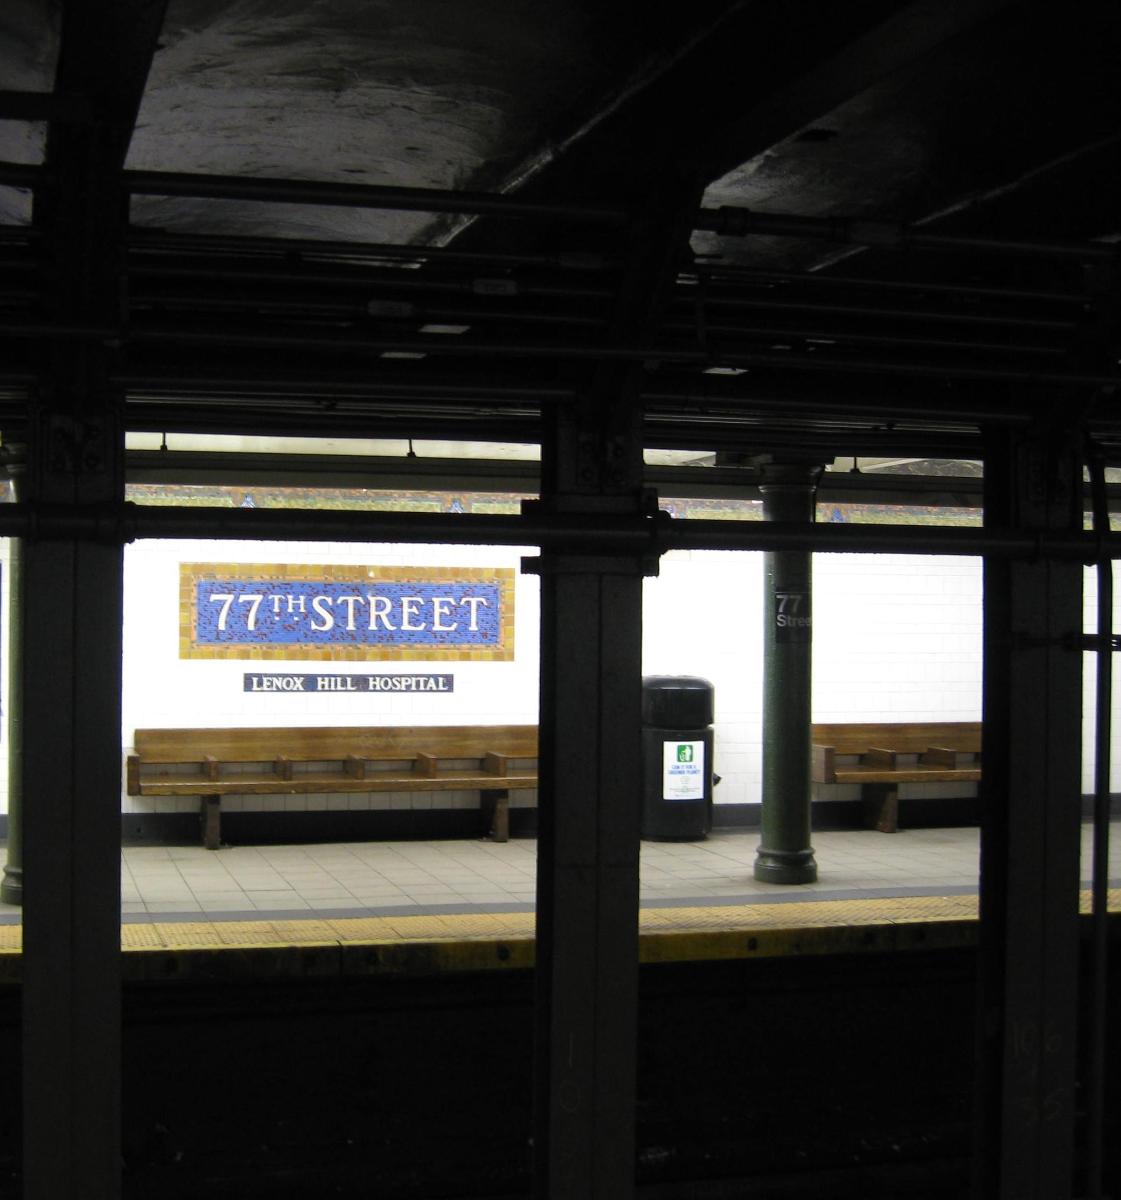 77th Street Subway Station (Lexington Avenue Line) Looking northwest across tracks at downtown platform of IRT station